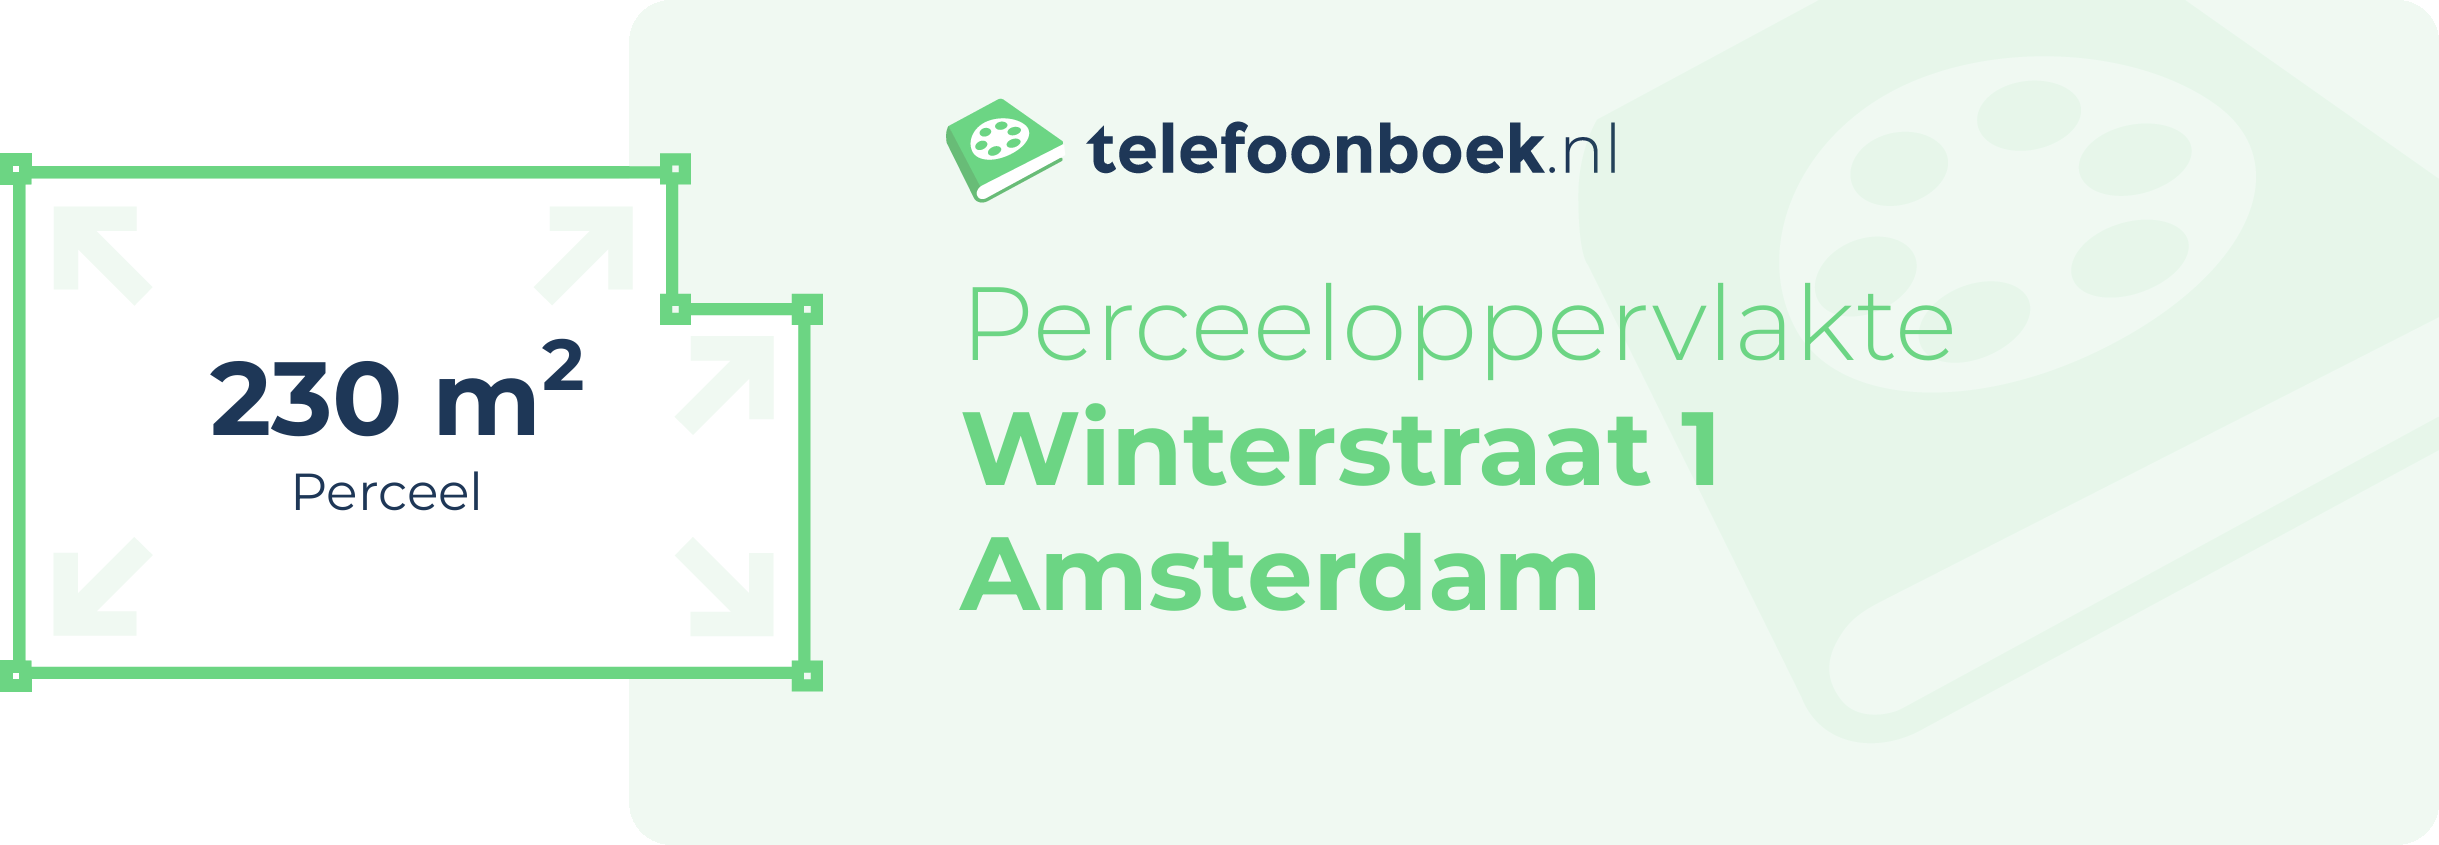 Perceeloppervlakte Winterstraat 1 Amsterdam